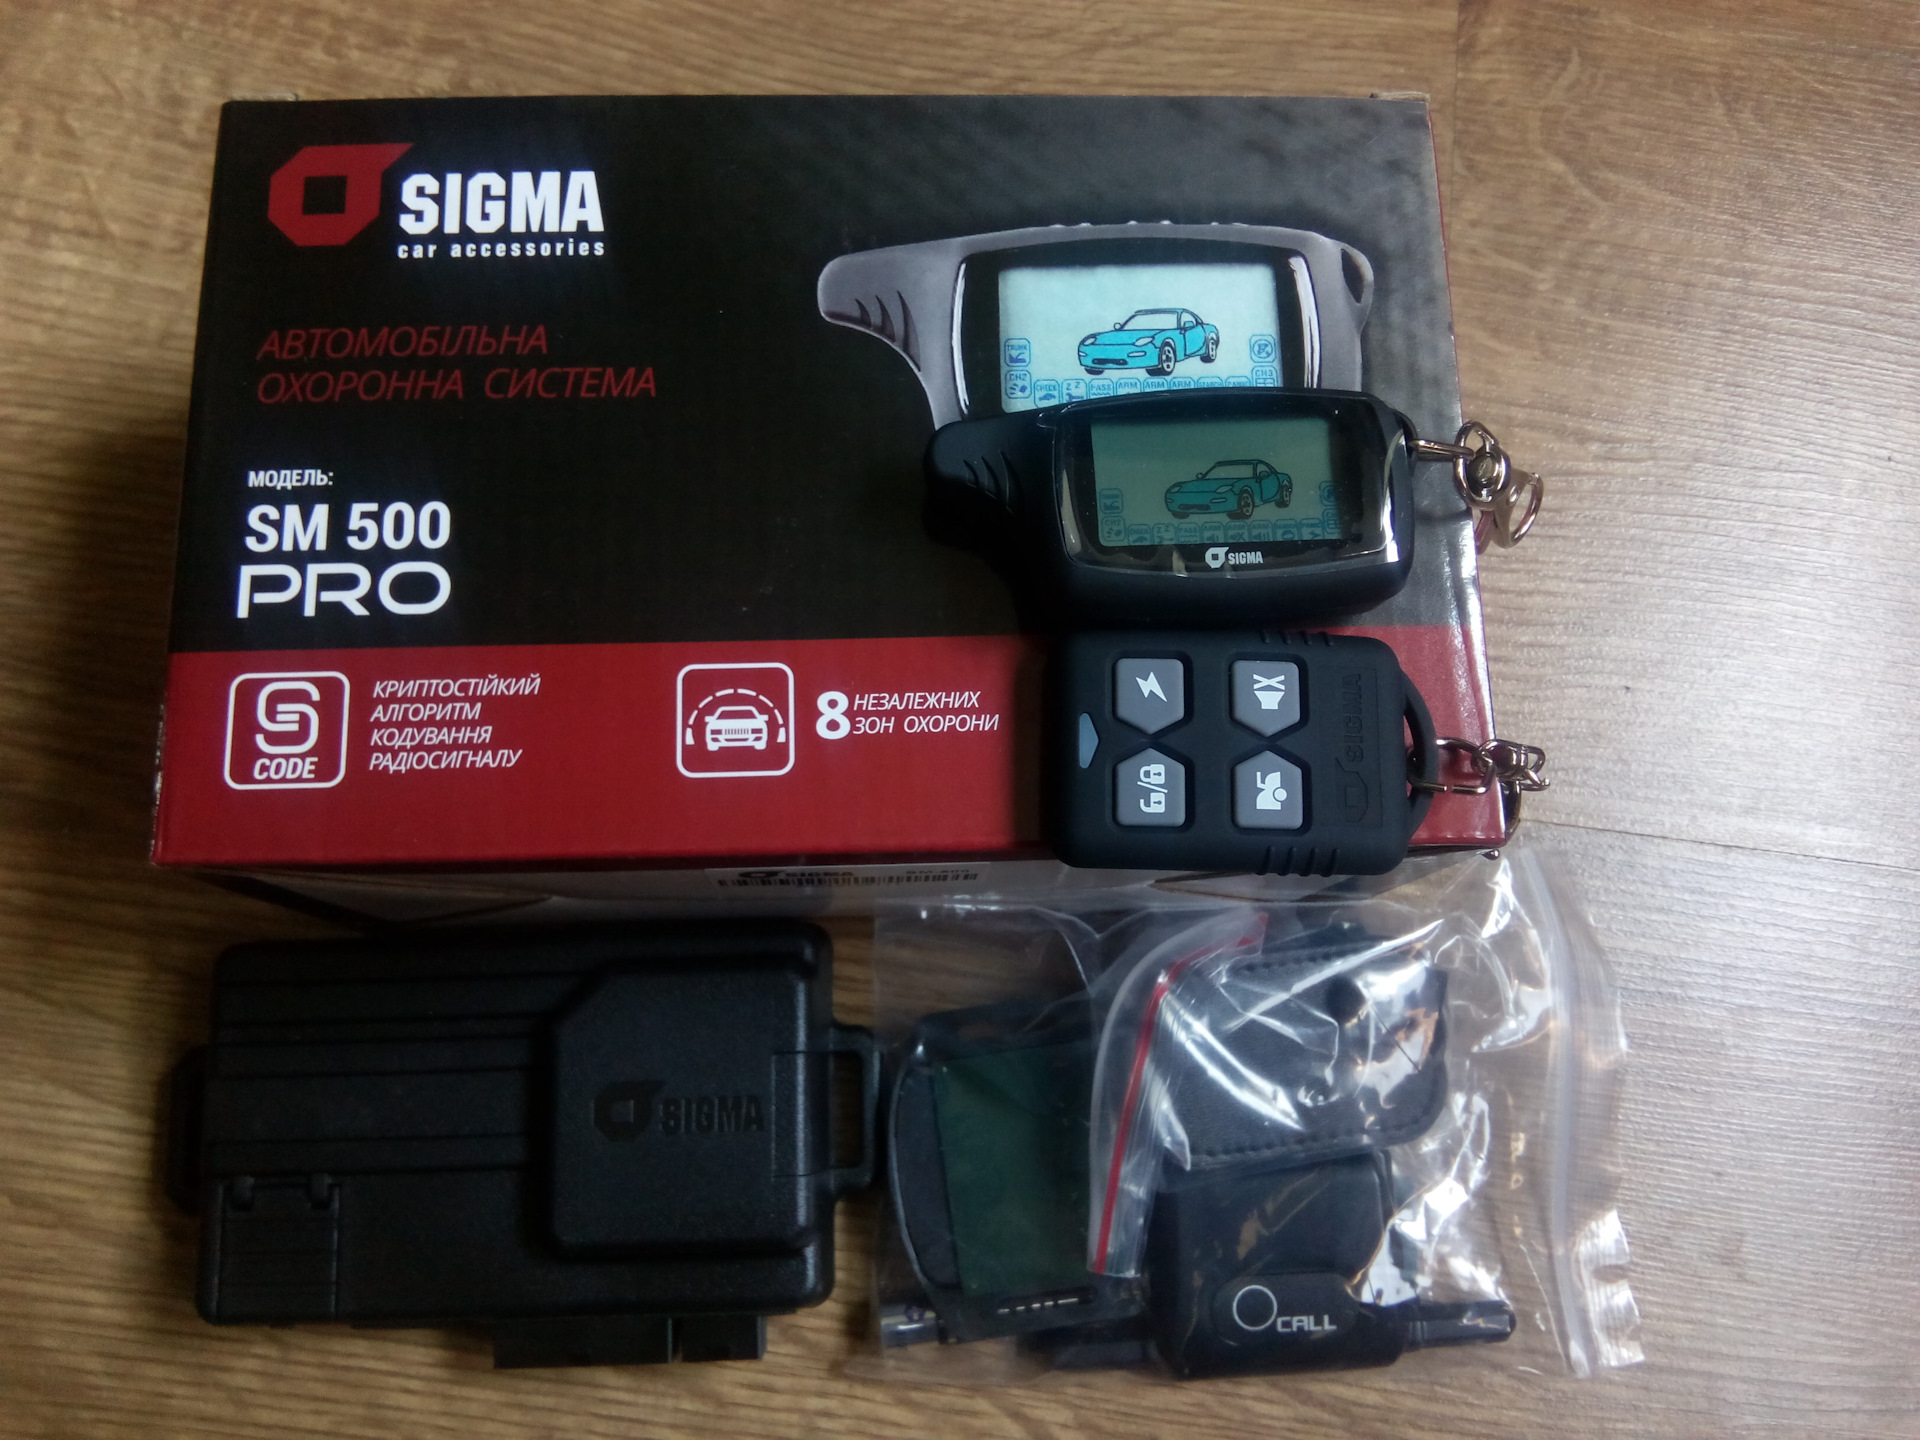 Sigma call. Сигнализация Sigma SM 150. Автосигнализация Sigma SM-500 Pro. SM-500pro. Сигнализация Sigma старые модели.